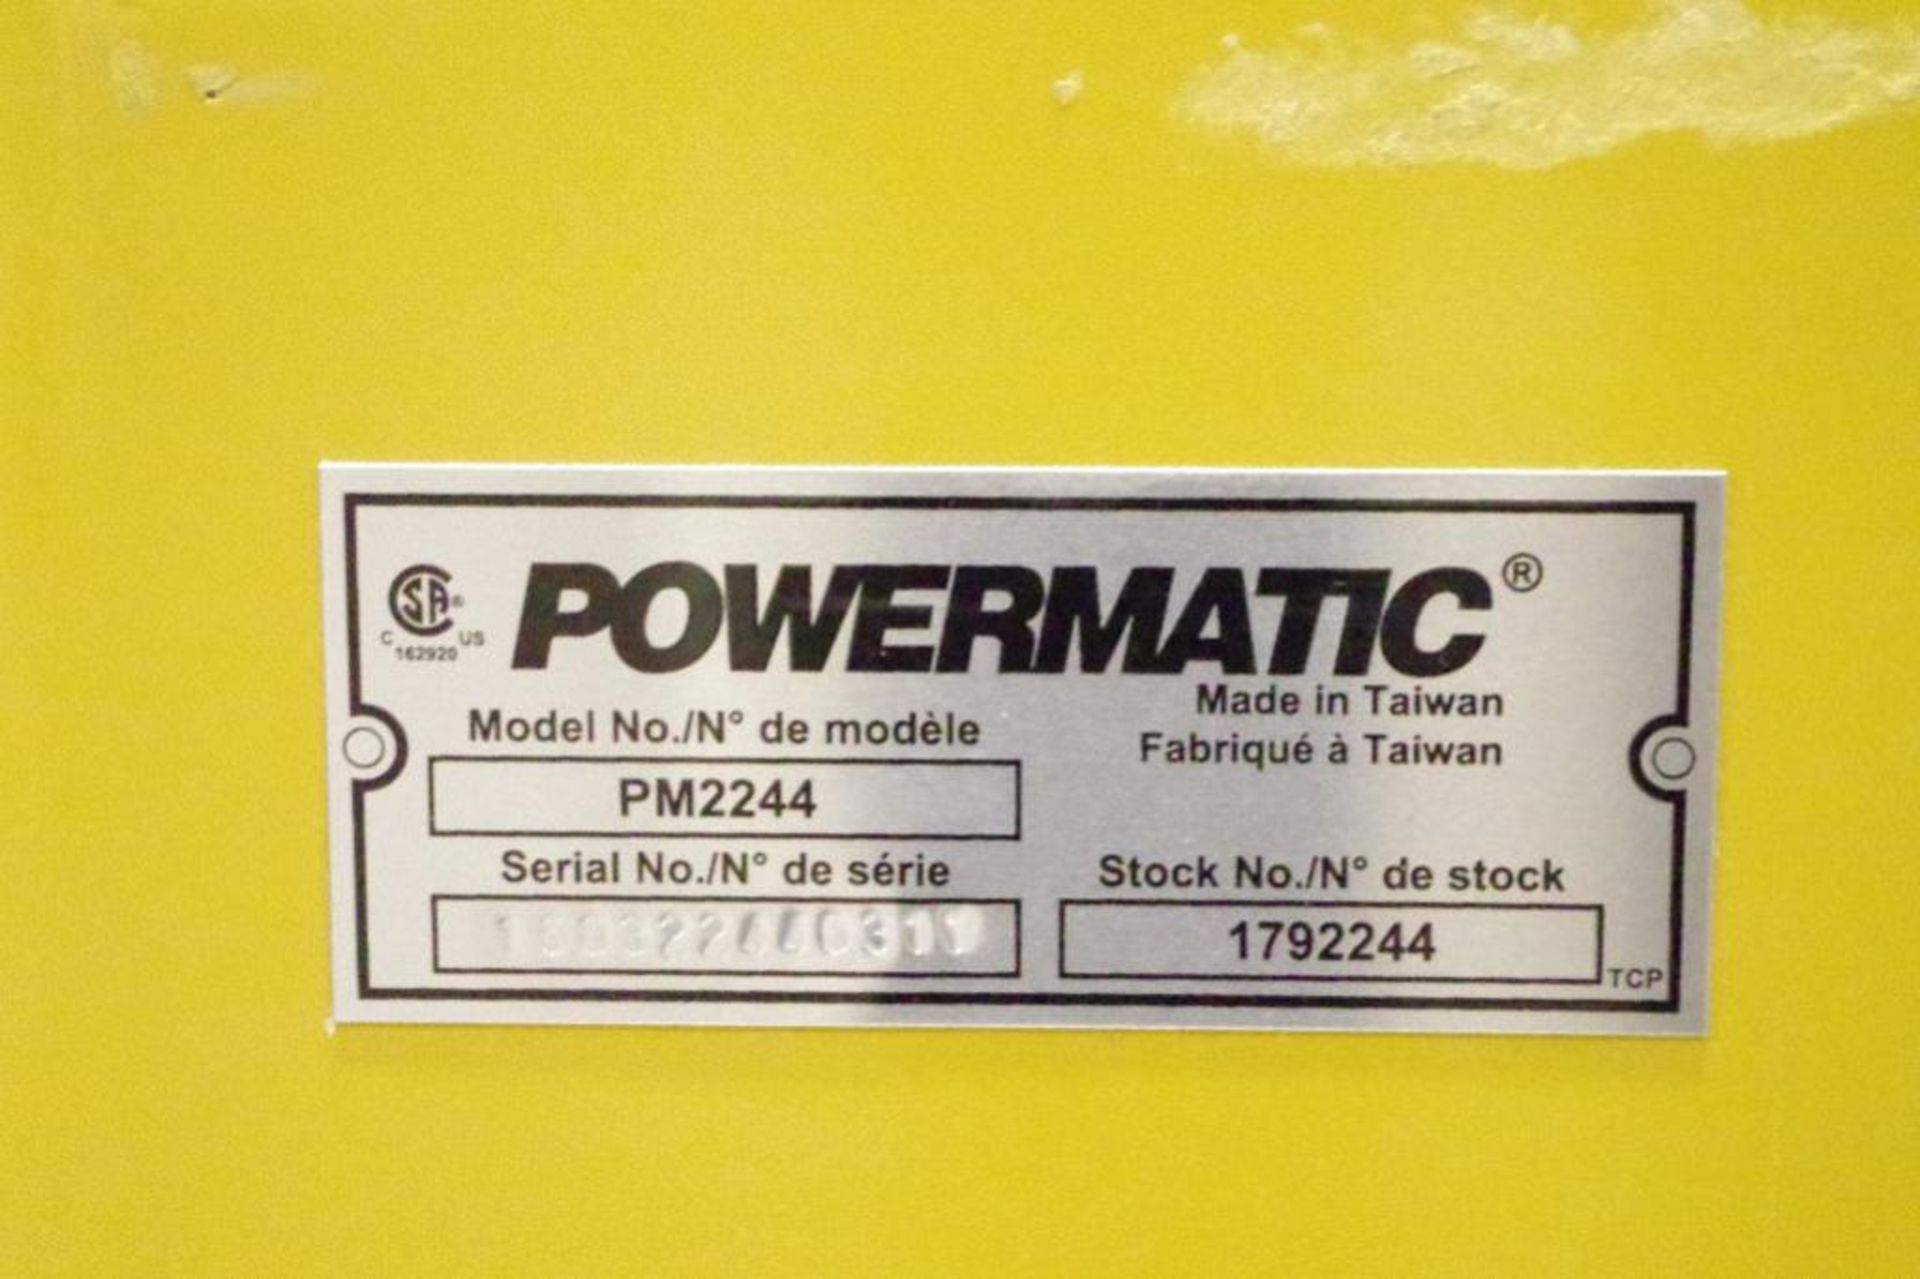 POWERMATIC Tool Stand, 35" x 16" x 24"H - Image 2 of 3